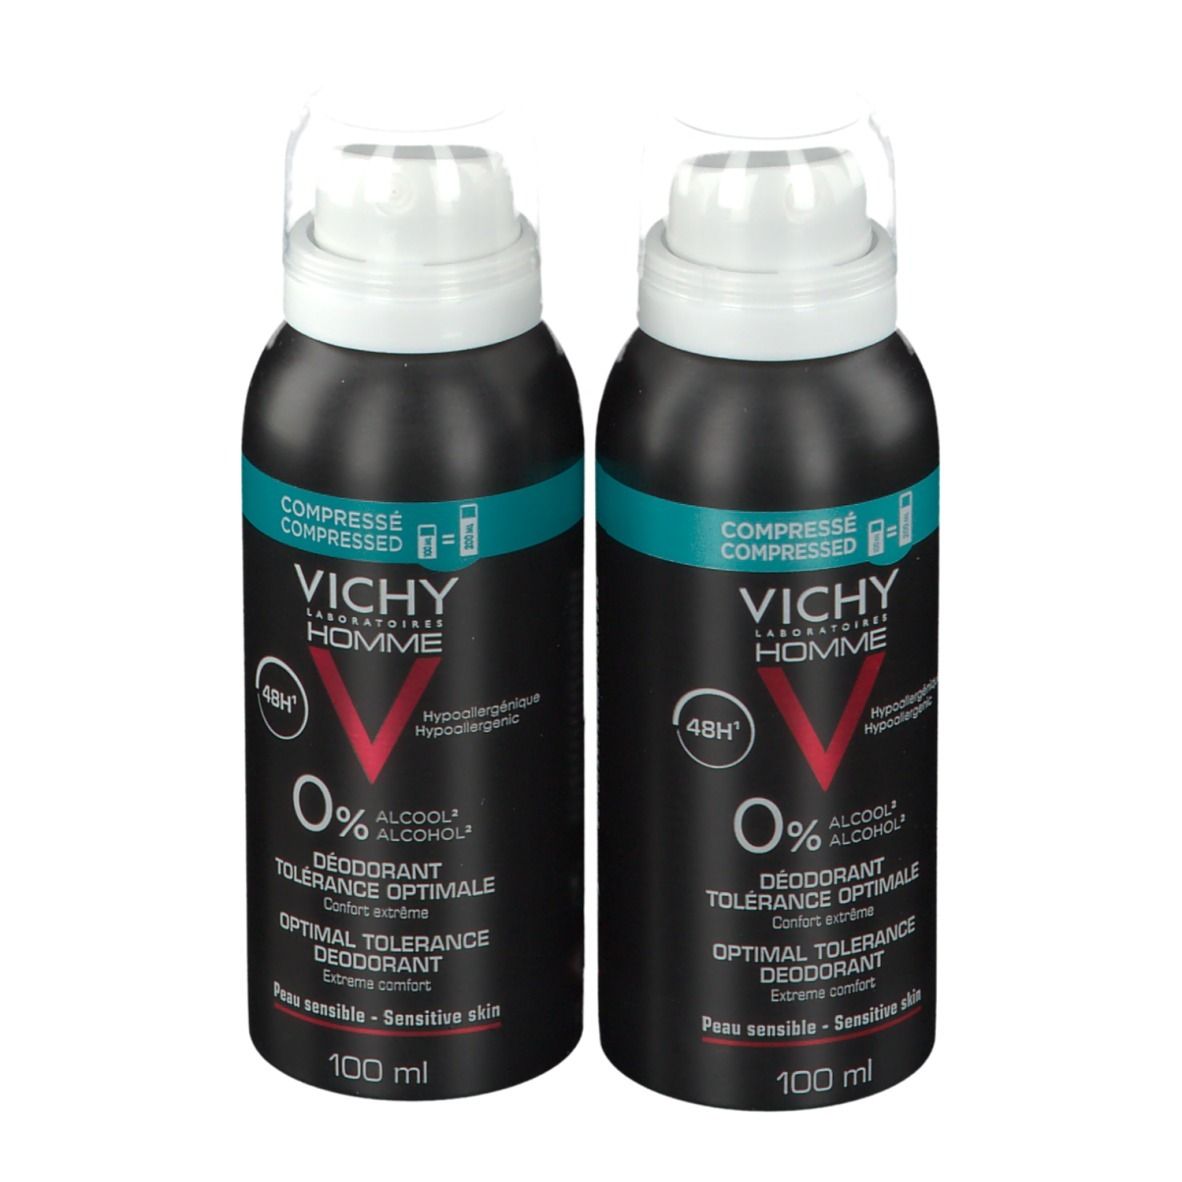 L'OREAL BELGILUX - DIVISION COSMETIQUE ACTIVE Vichy 48H Deodorant